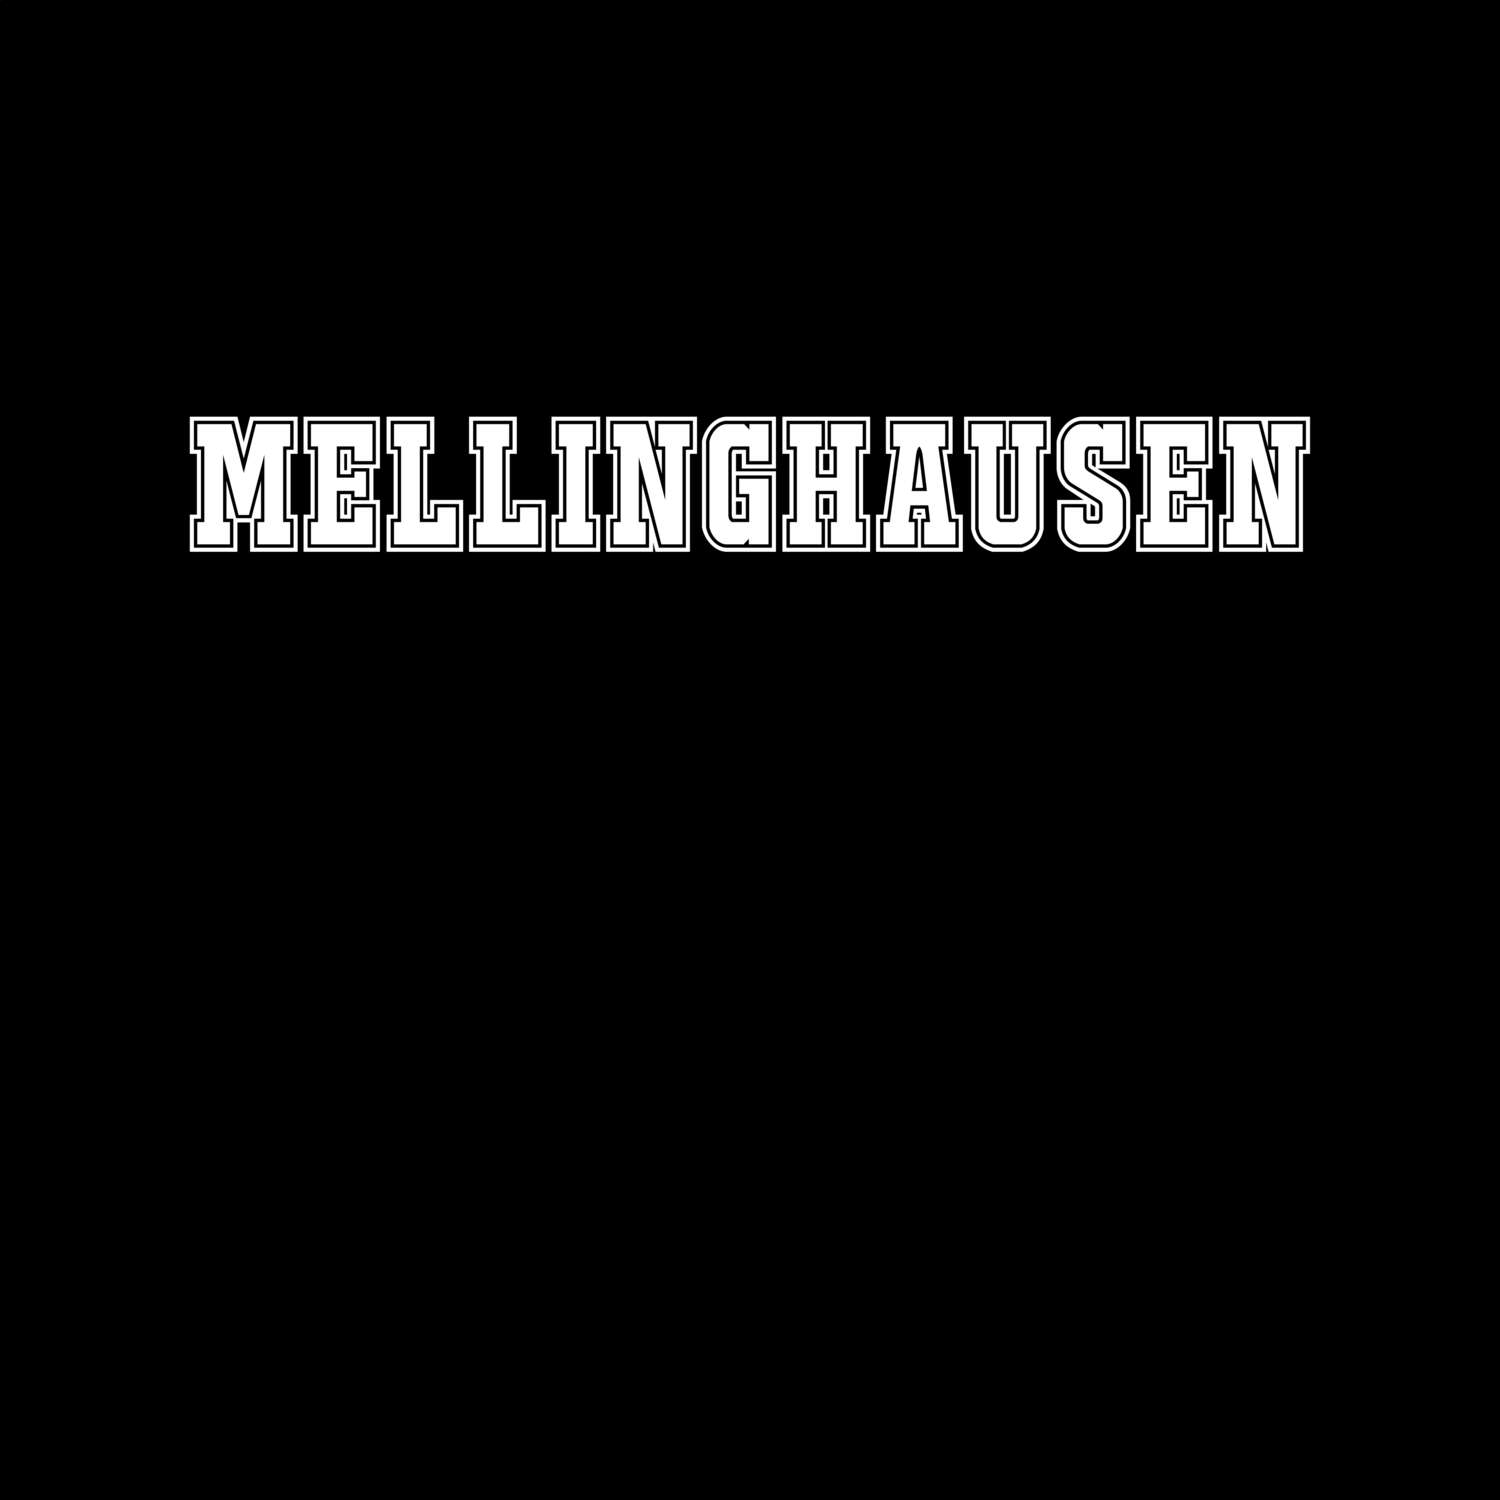 Mellinghausen T-Shirt »Classic«